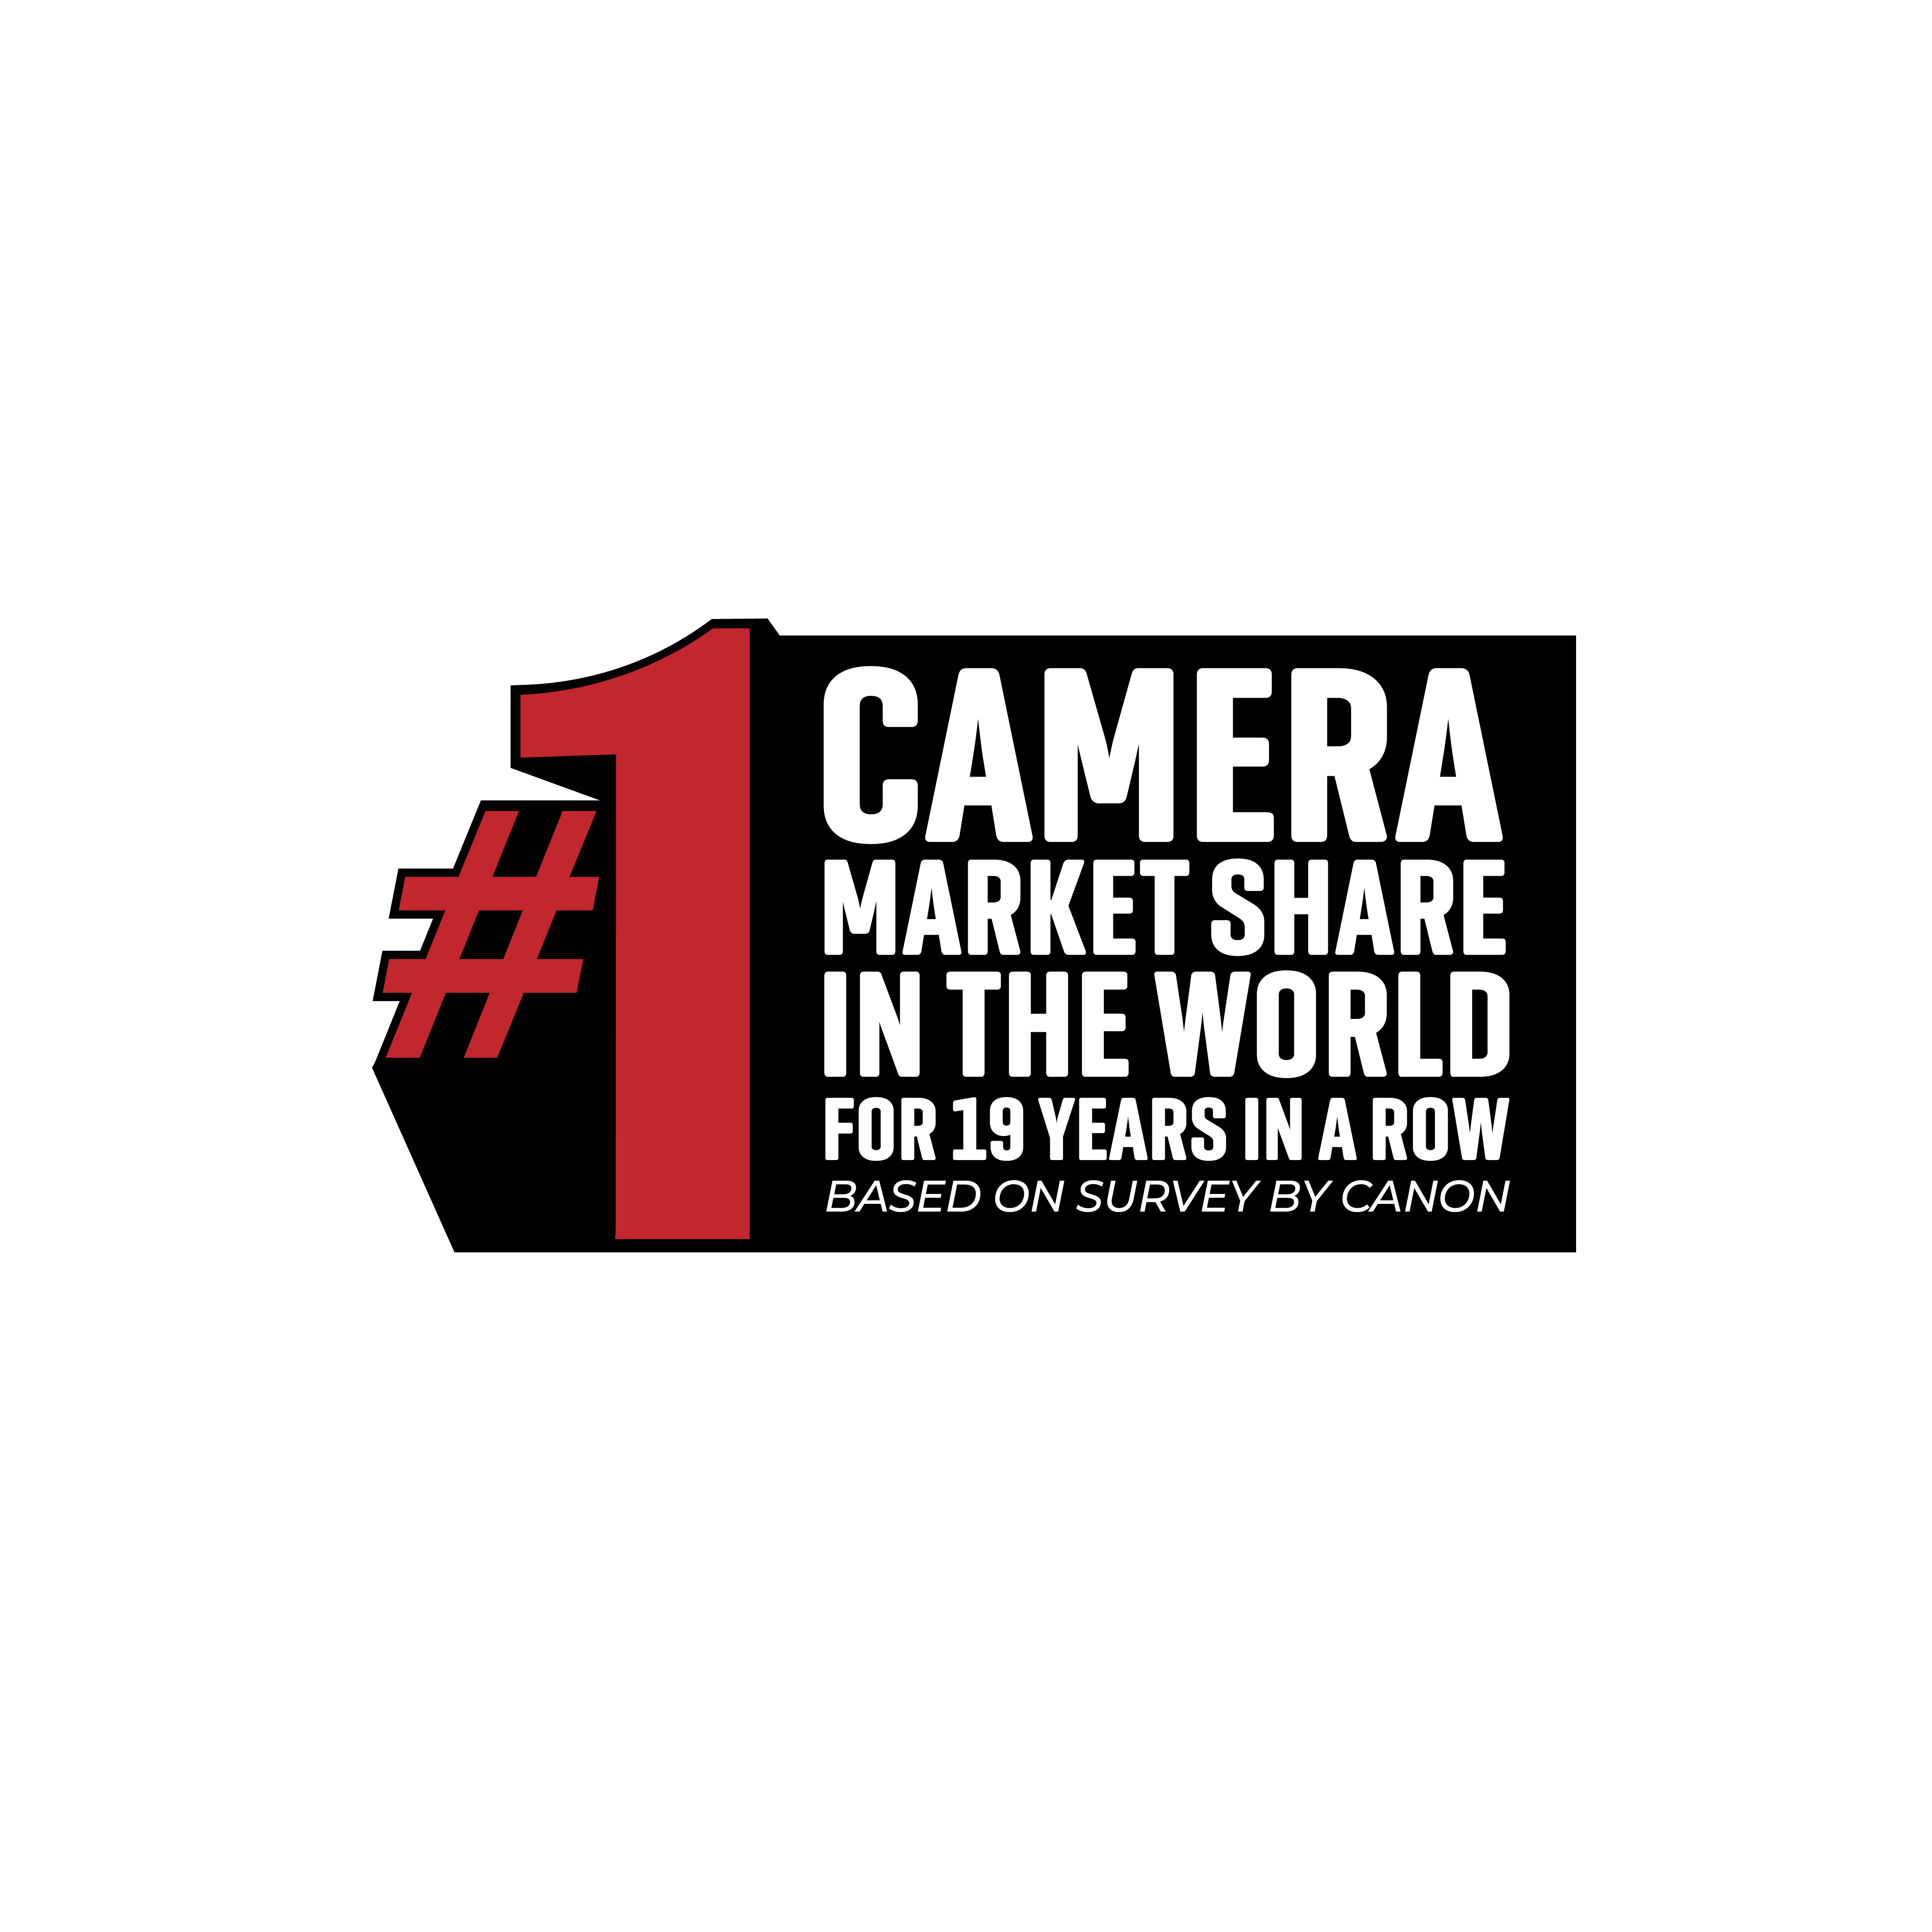 #1 Market Share